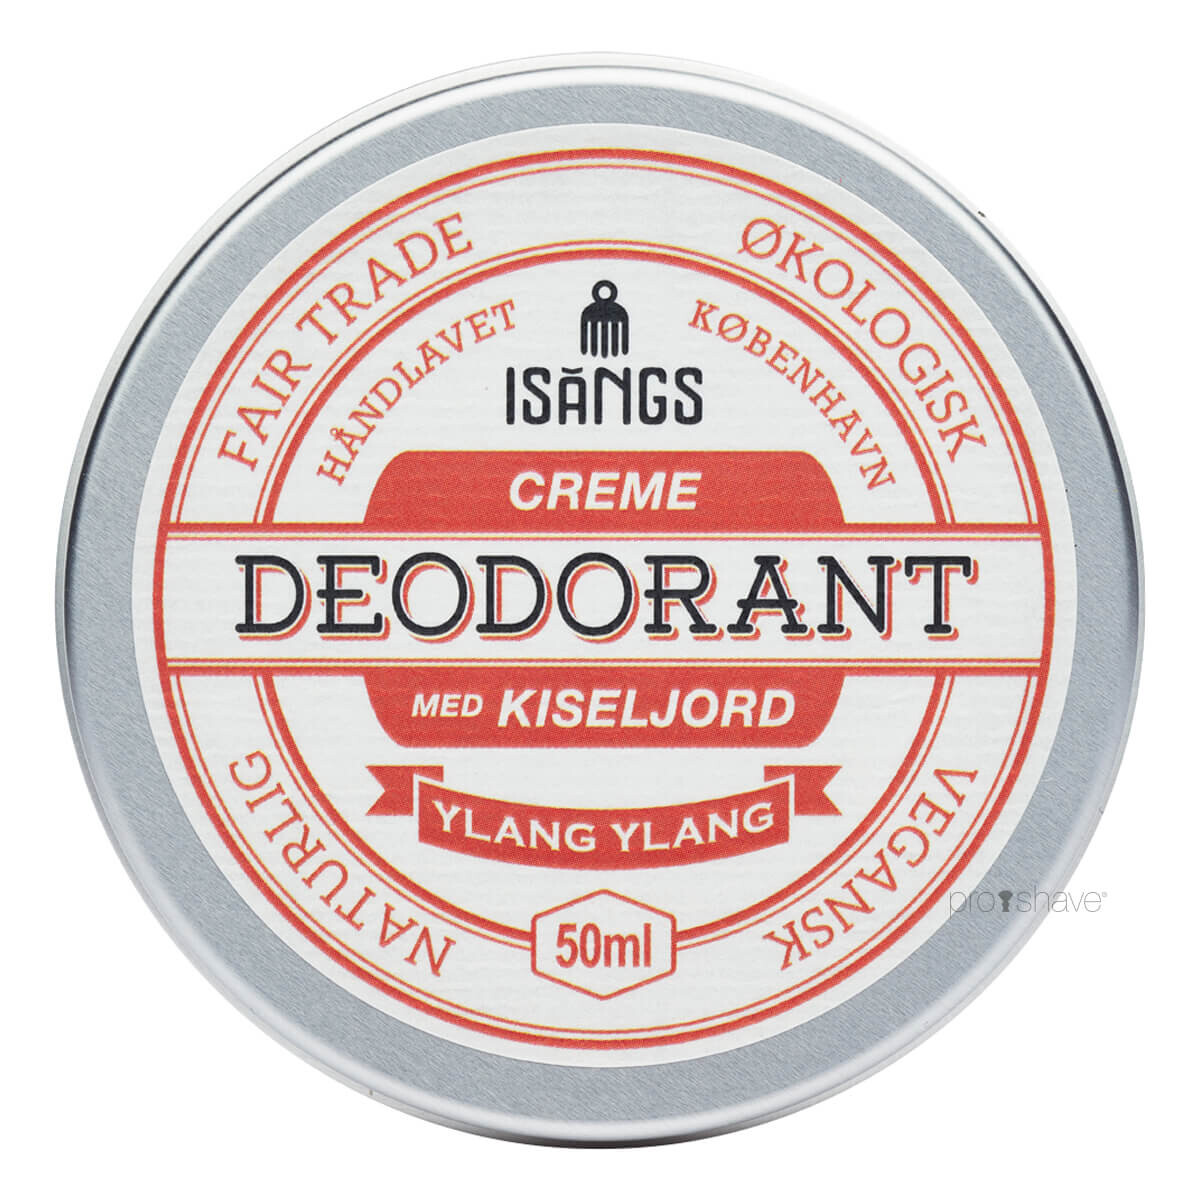 Billede af Isangs Creme Deodorant med Kiseljord, Ylang Ylang, 50 ml.